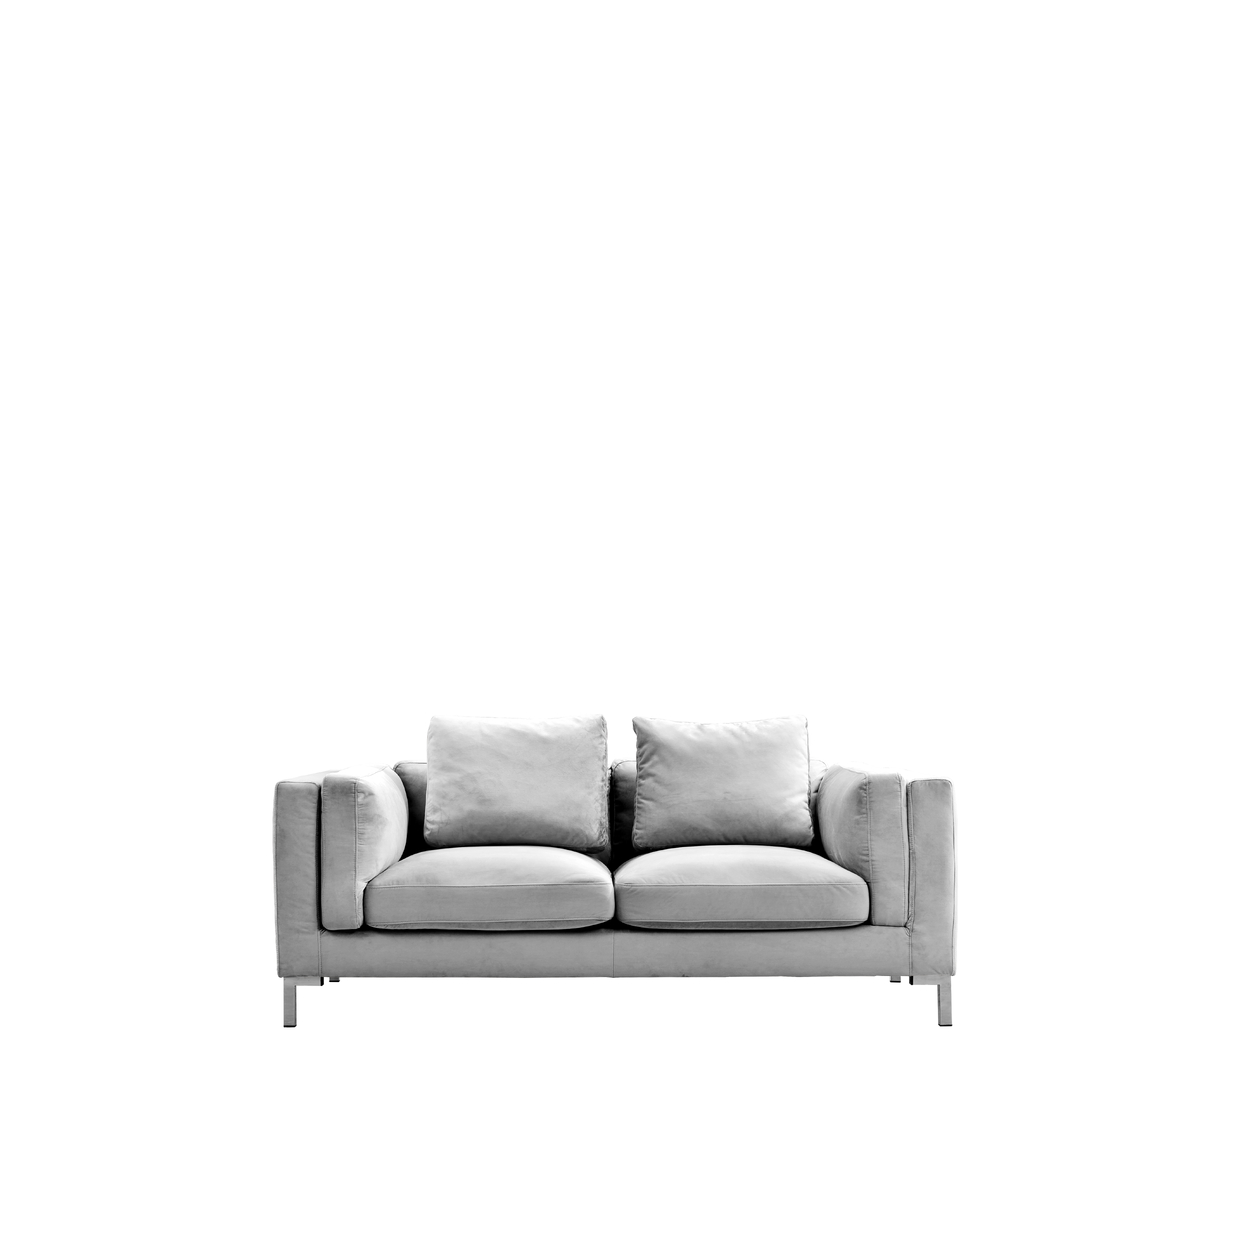 Iconic Home Everlie Loveseat Velvet Upholstered Multi-Cushion Seat Loose Back Shelter Arm Design Silver Tone Metal Y-Legs - Grey